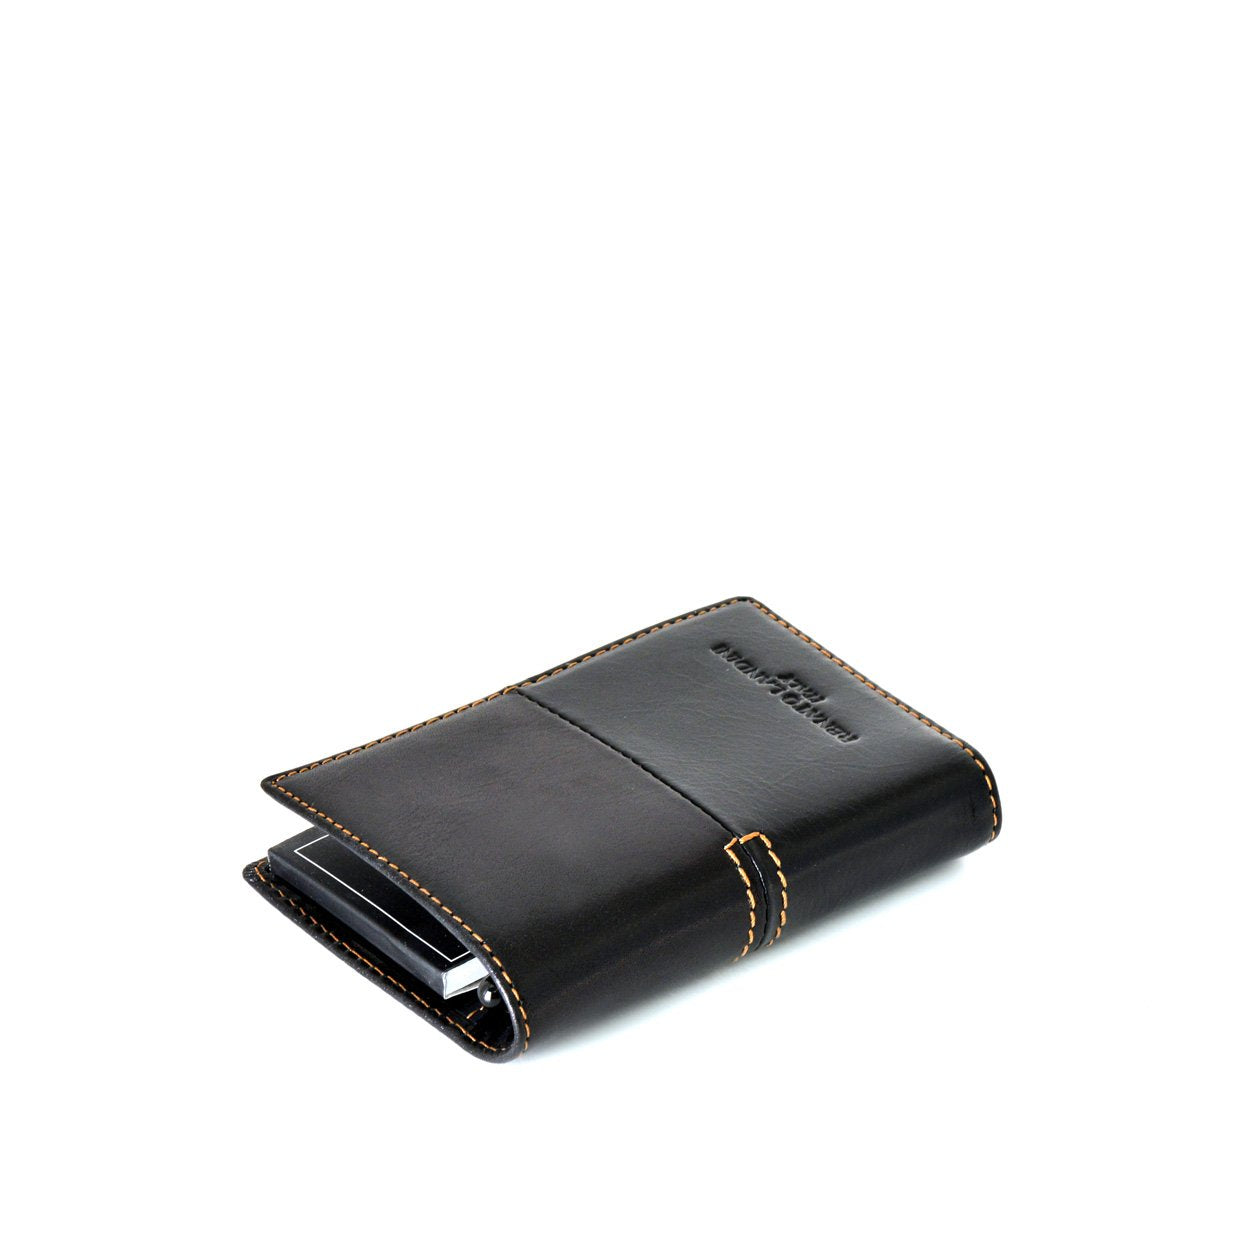 RENATO LANDINI Notepad Holder With Pen/ Firefly